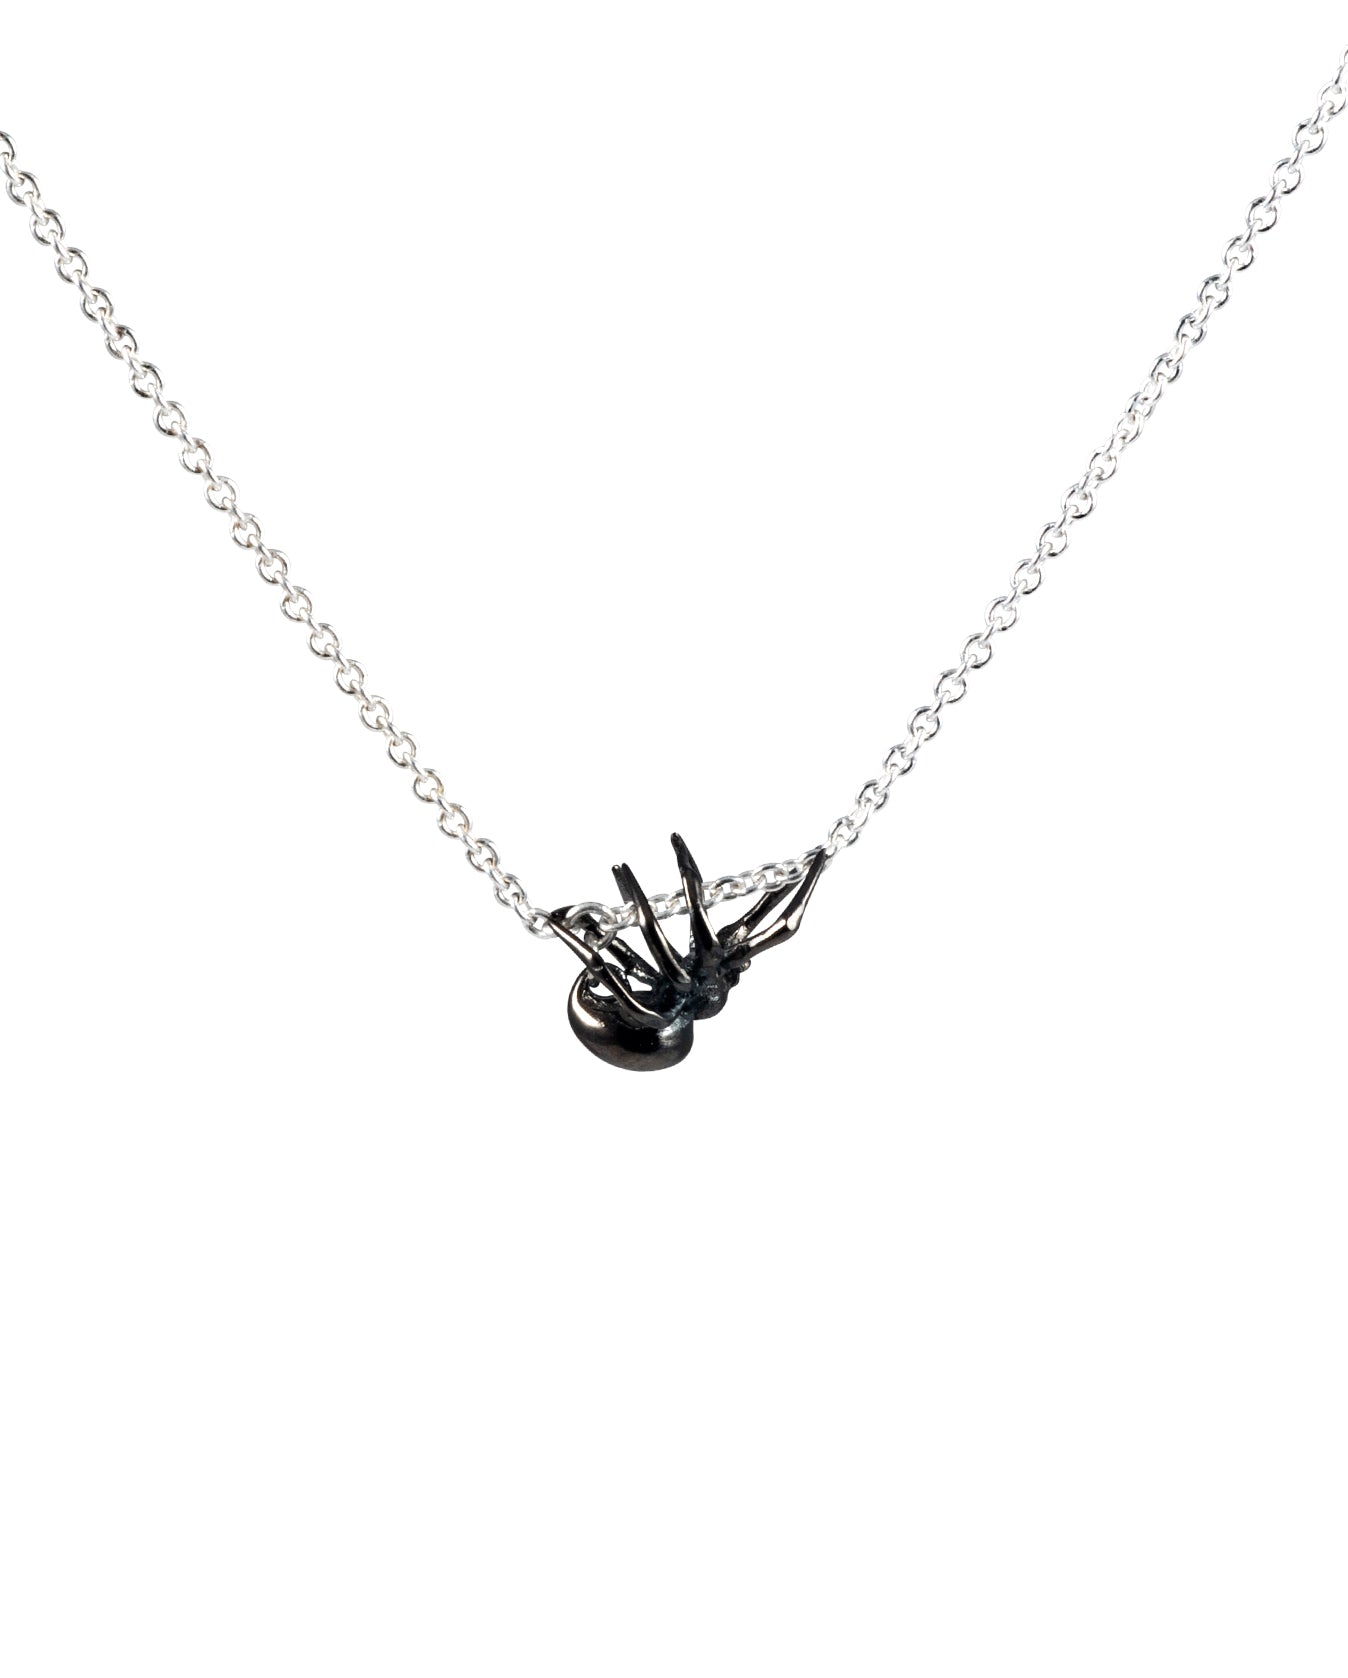 Black Widow Pendant Necklace – Marvel's Black | Marvel | shopDisney |  Marvel jewelry, Black widow marvel, Black widow